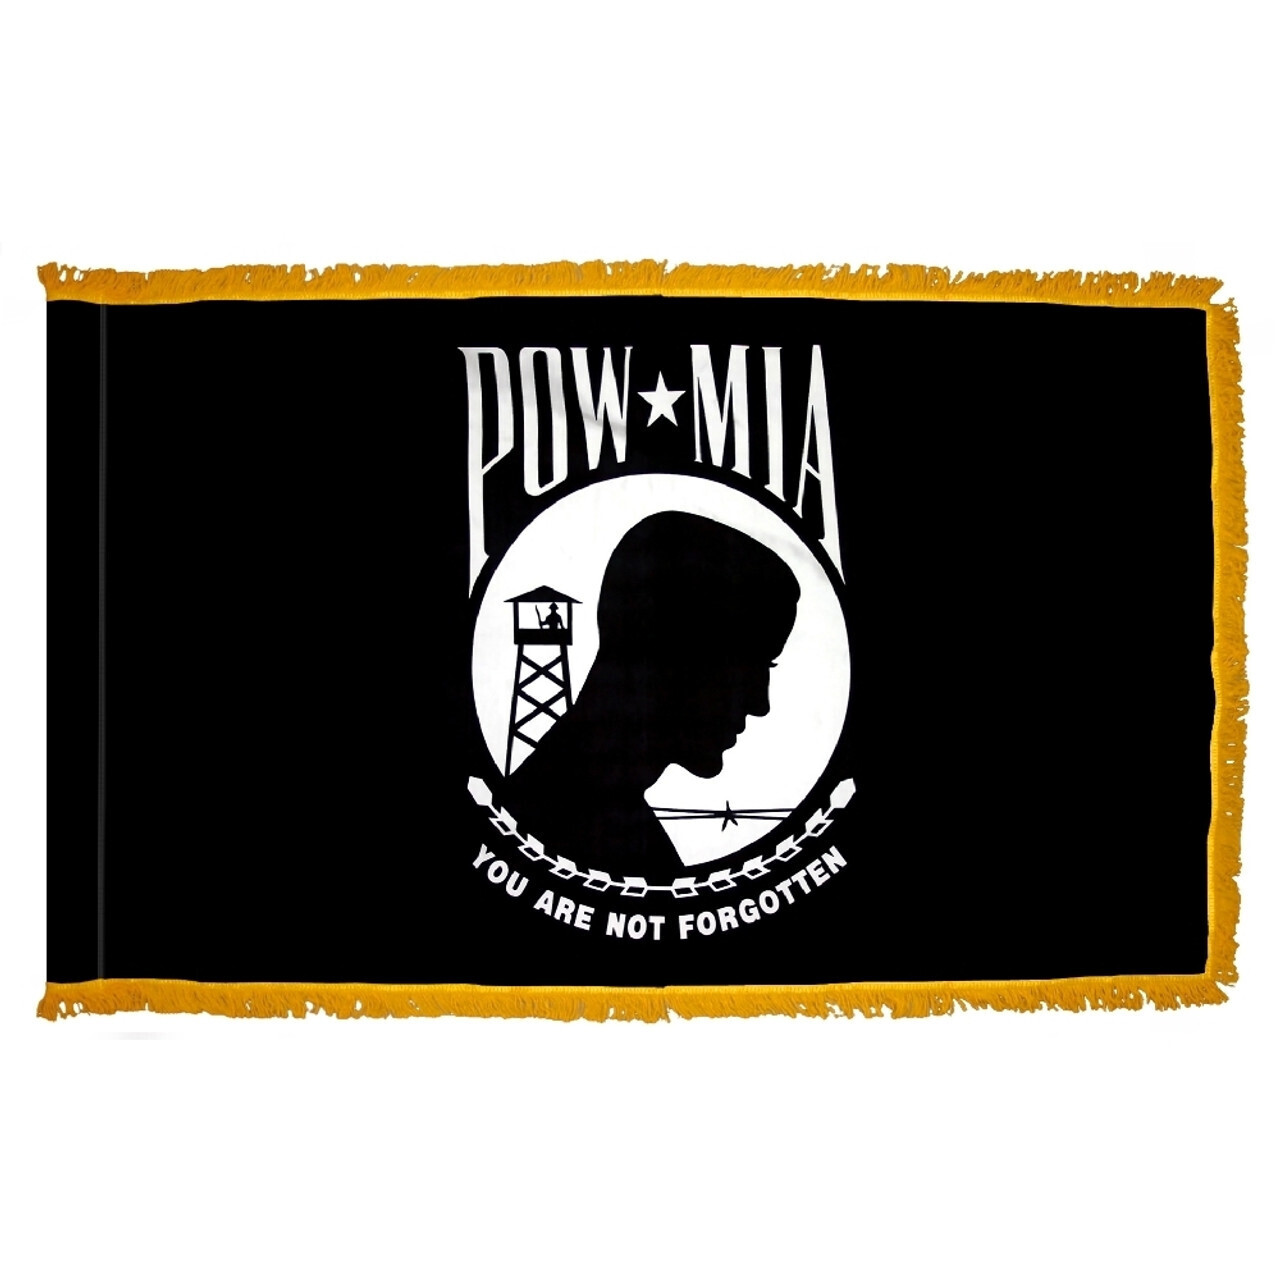 POW/MIA single sided Flag 3x5 ft.. Nylon SolarGuard Nyl-Glo with fringe & pole sleeve. 100% Made in USA..